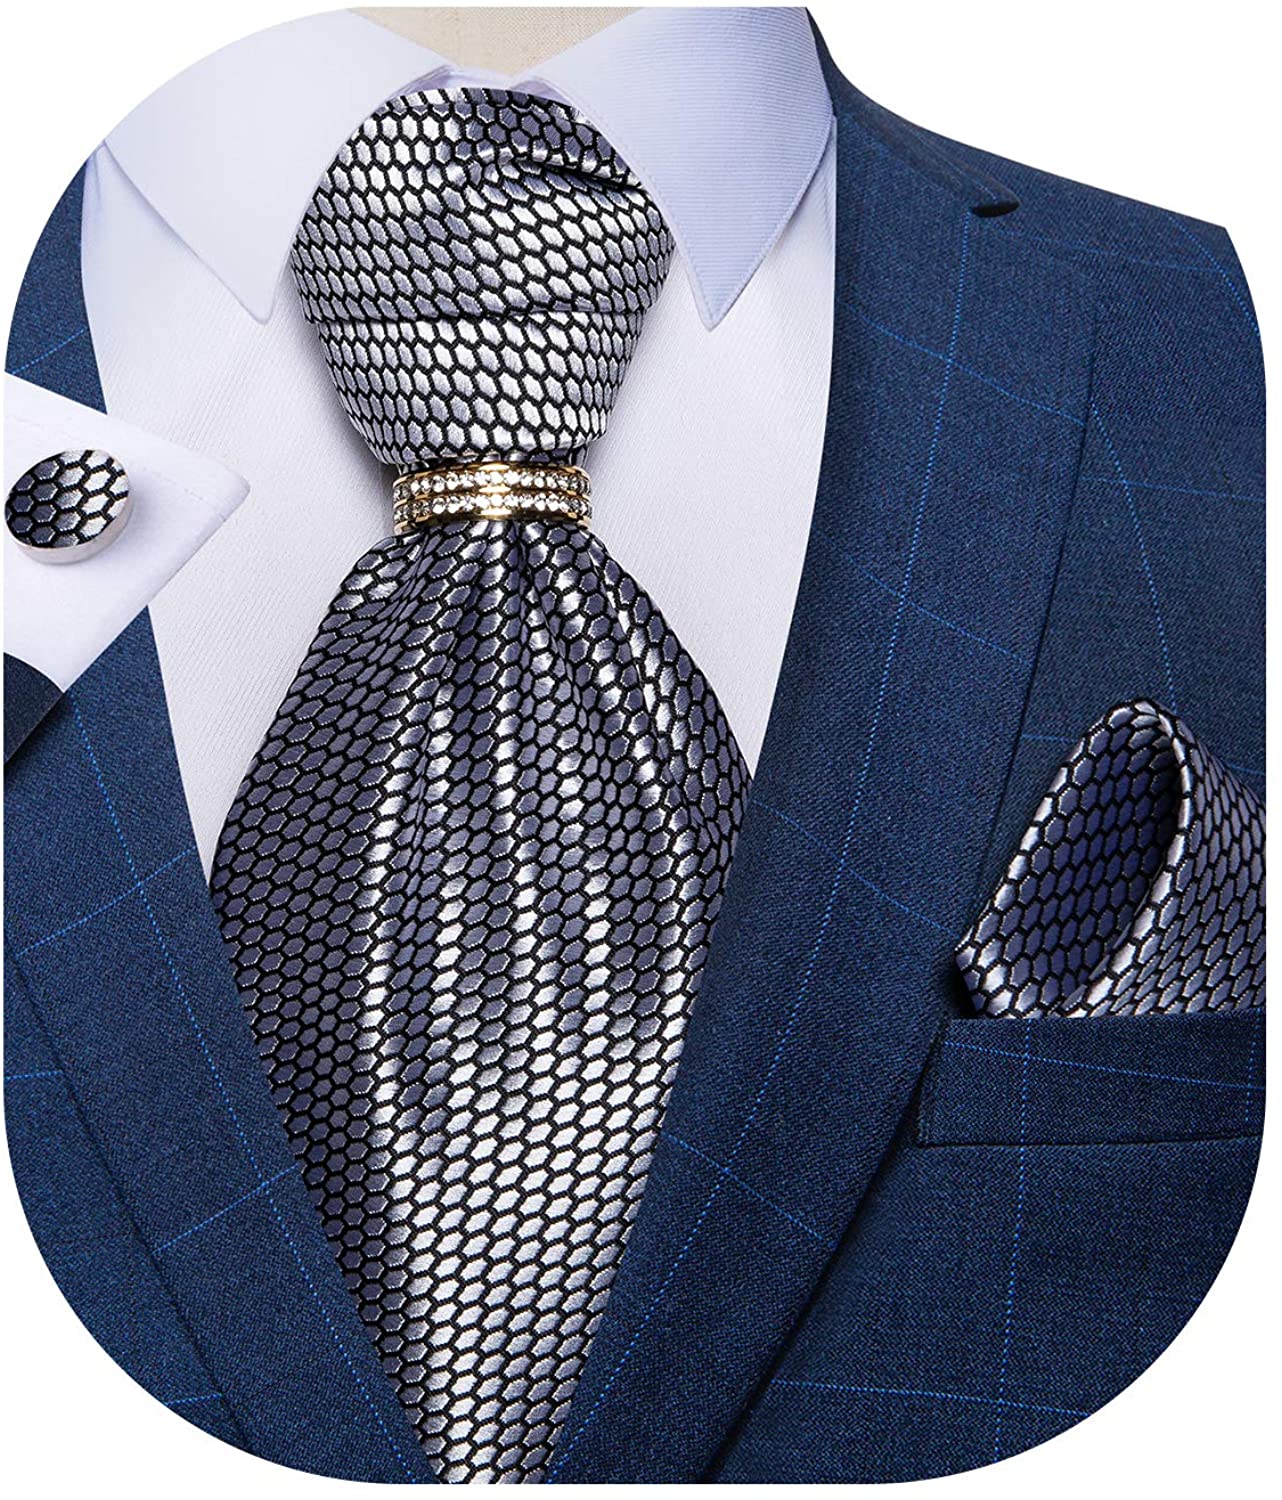 DiBanGu Paisley Cravat for Men, 4 PCS Woven Ascot Tie Pocket